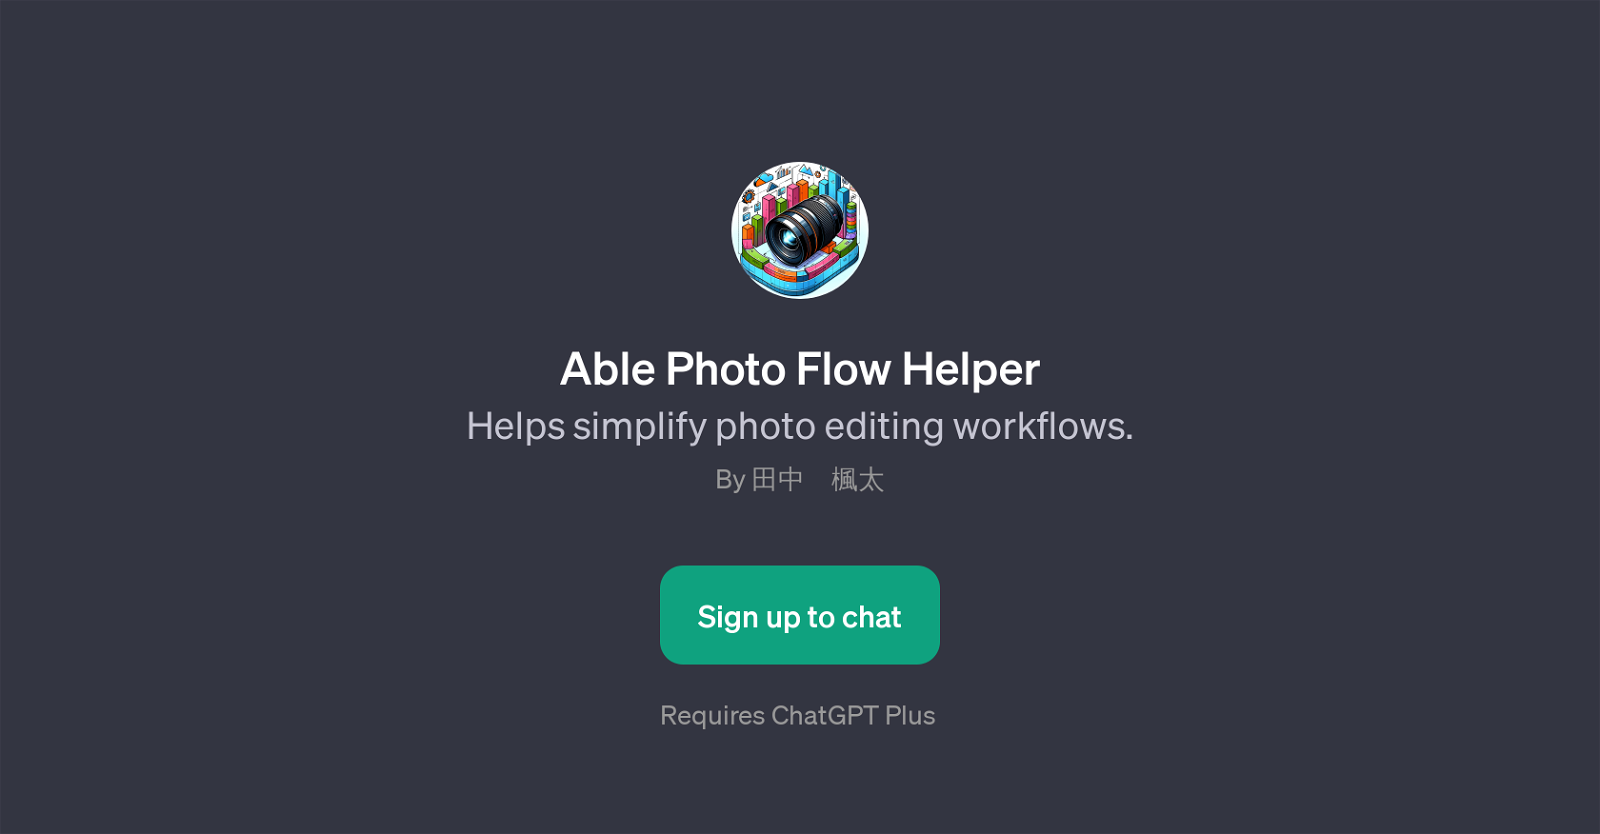 Able Photo Flow Helper website